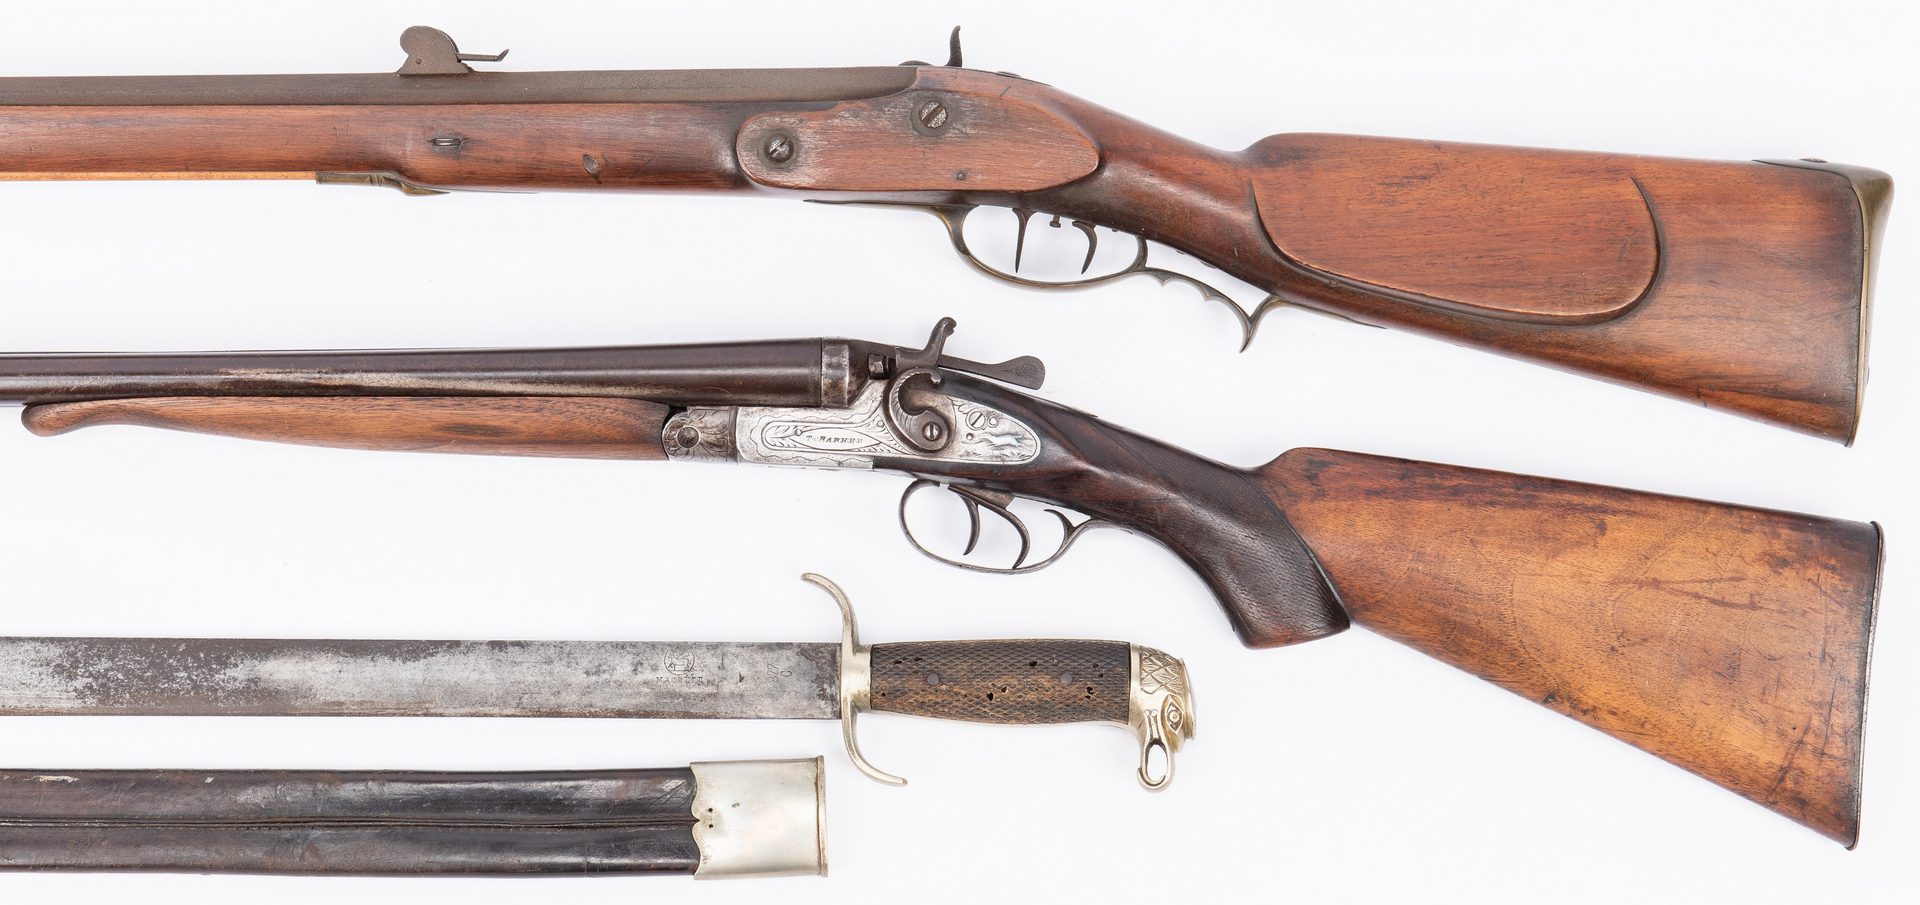 Lot 184: 2 19th Cent. Firearms, 1 WWI era German Machete, 3 items